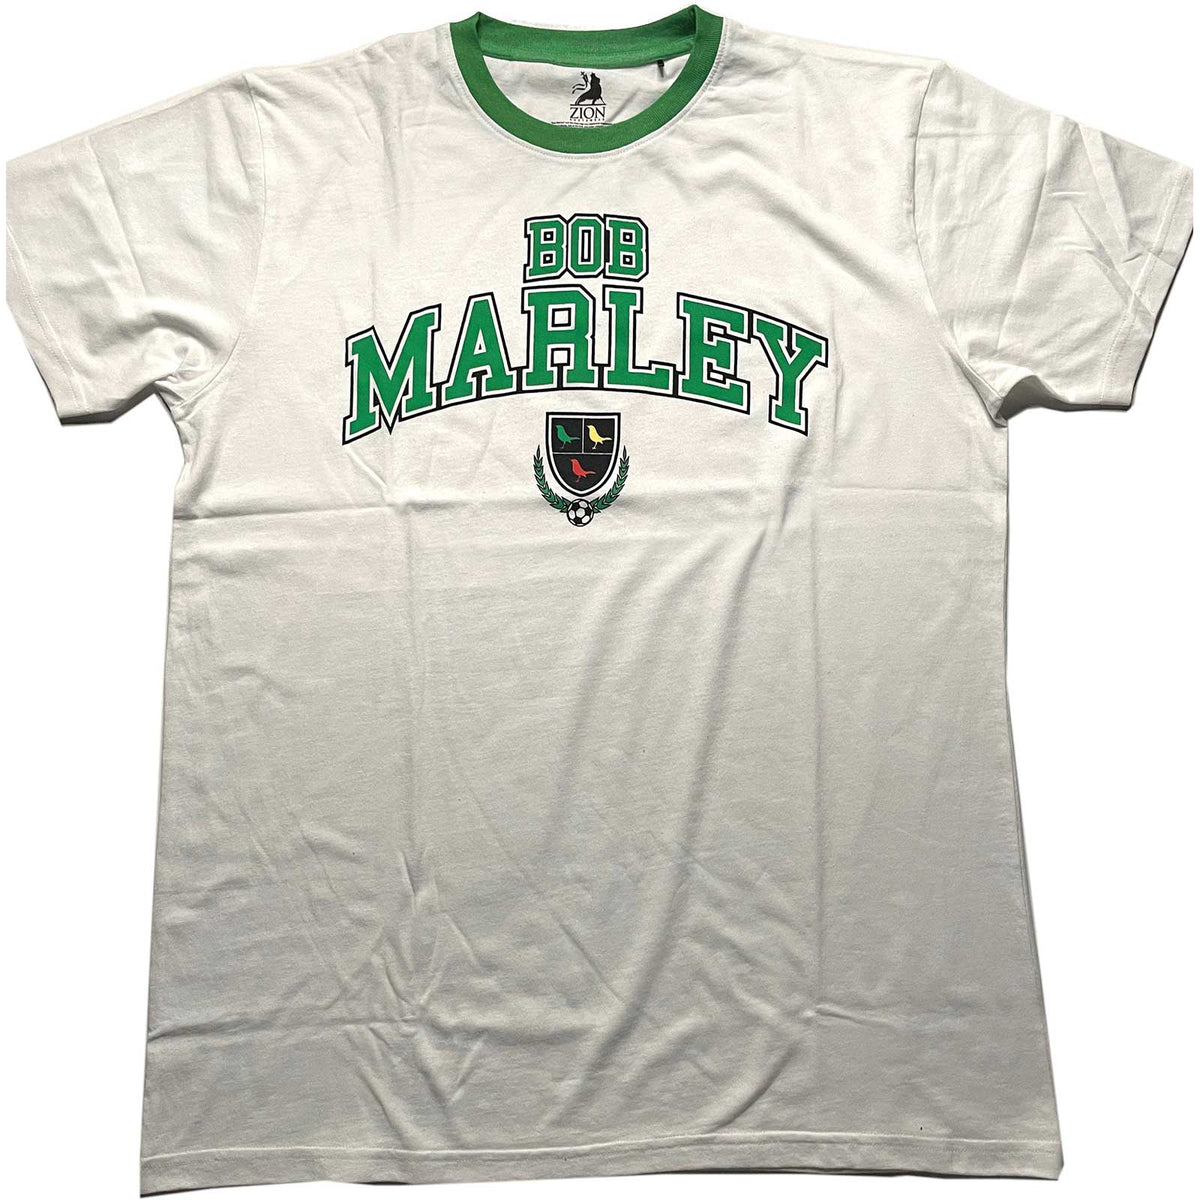 Bob Marley T-Shirt - Collegaite Crest - Unisex Ringer Official Licensed Design - Worldwide Shipping - Jelly Frog